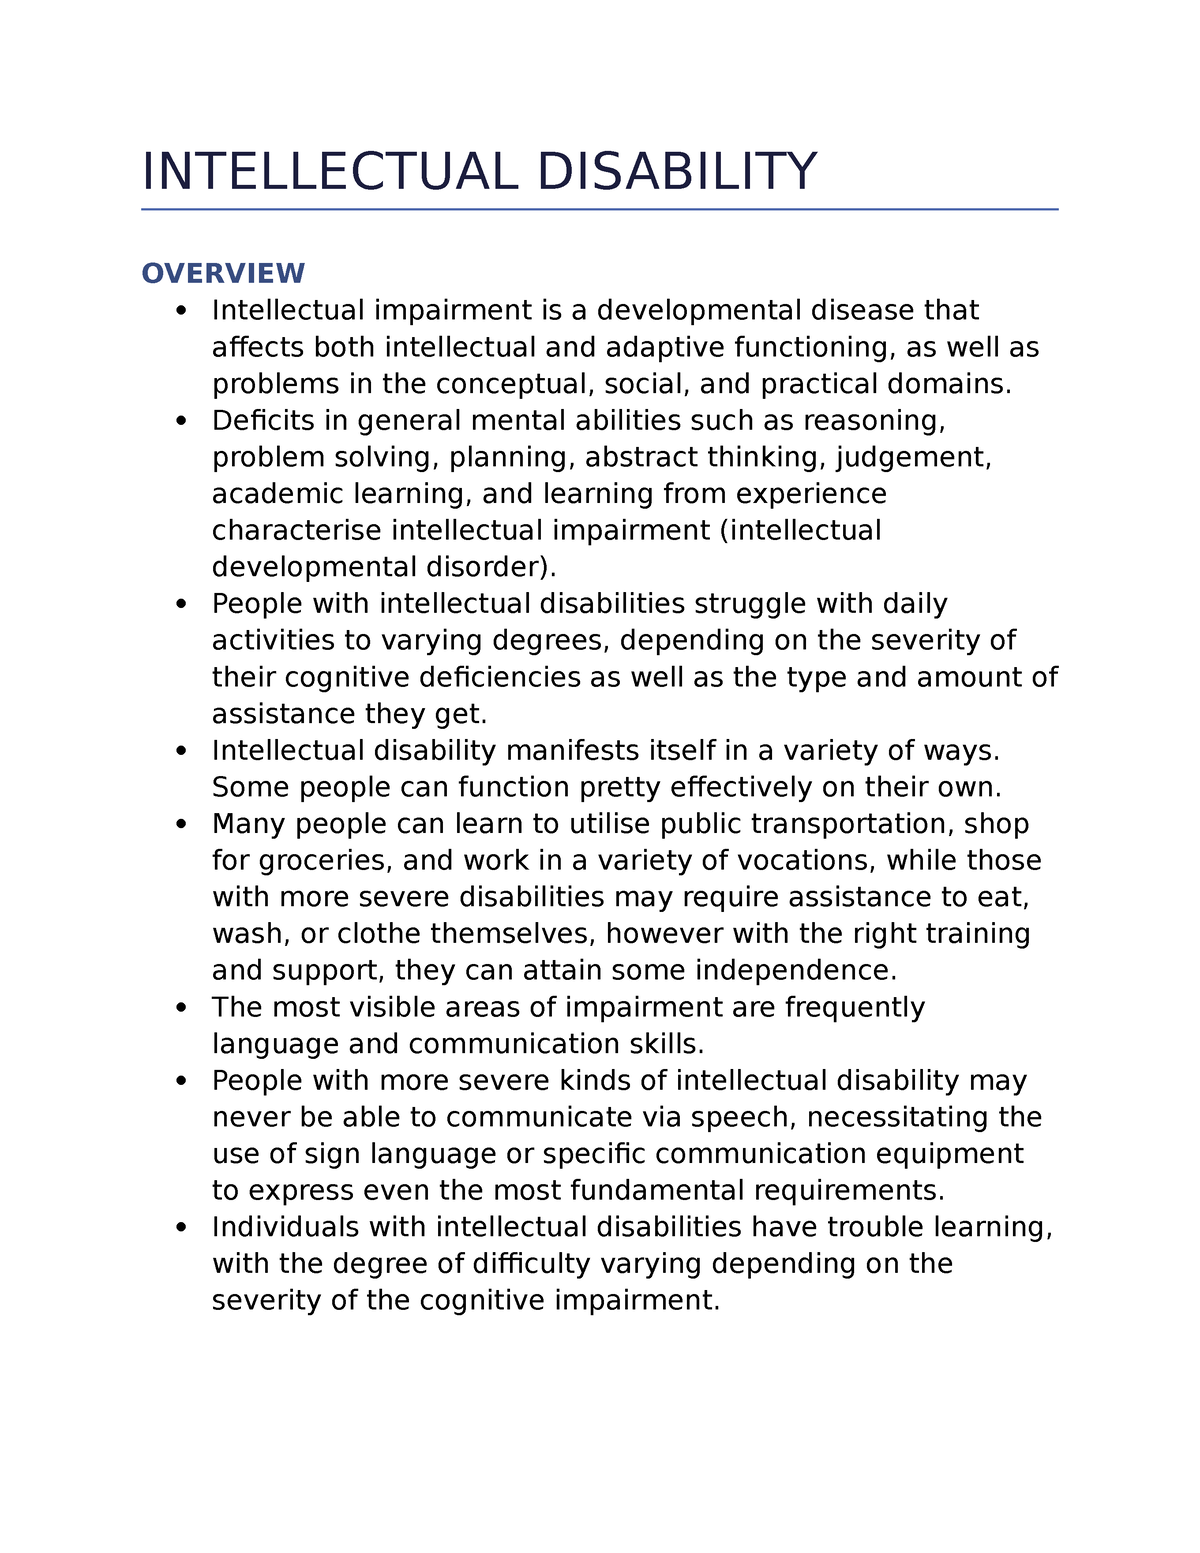 intellectual disability essay conclusion